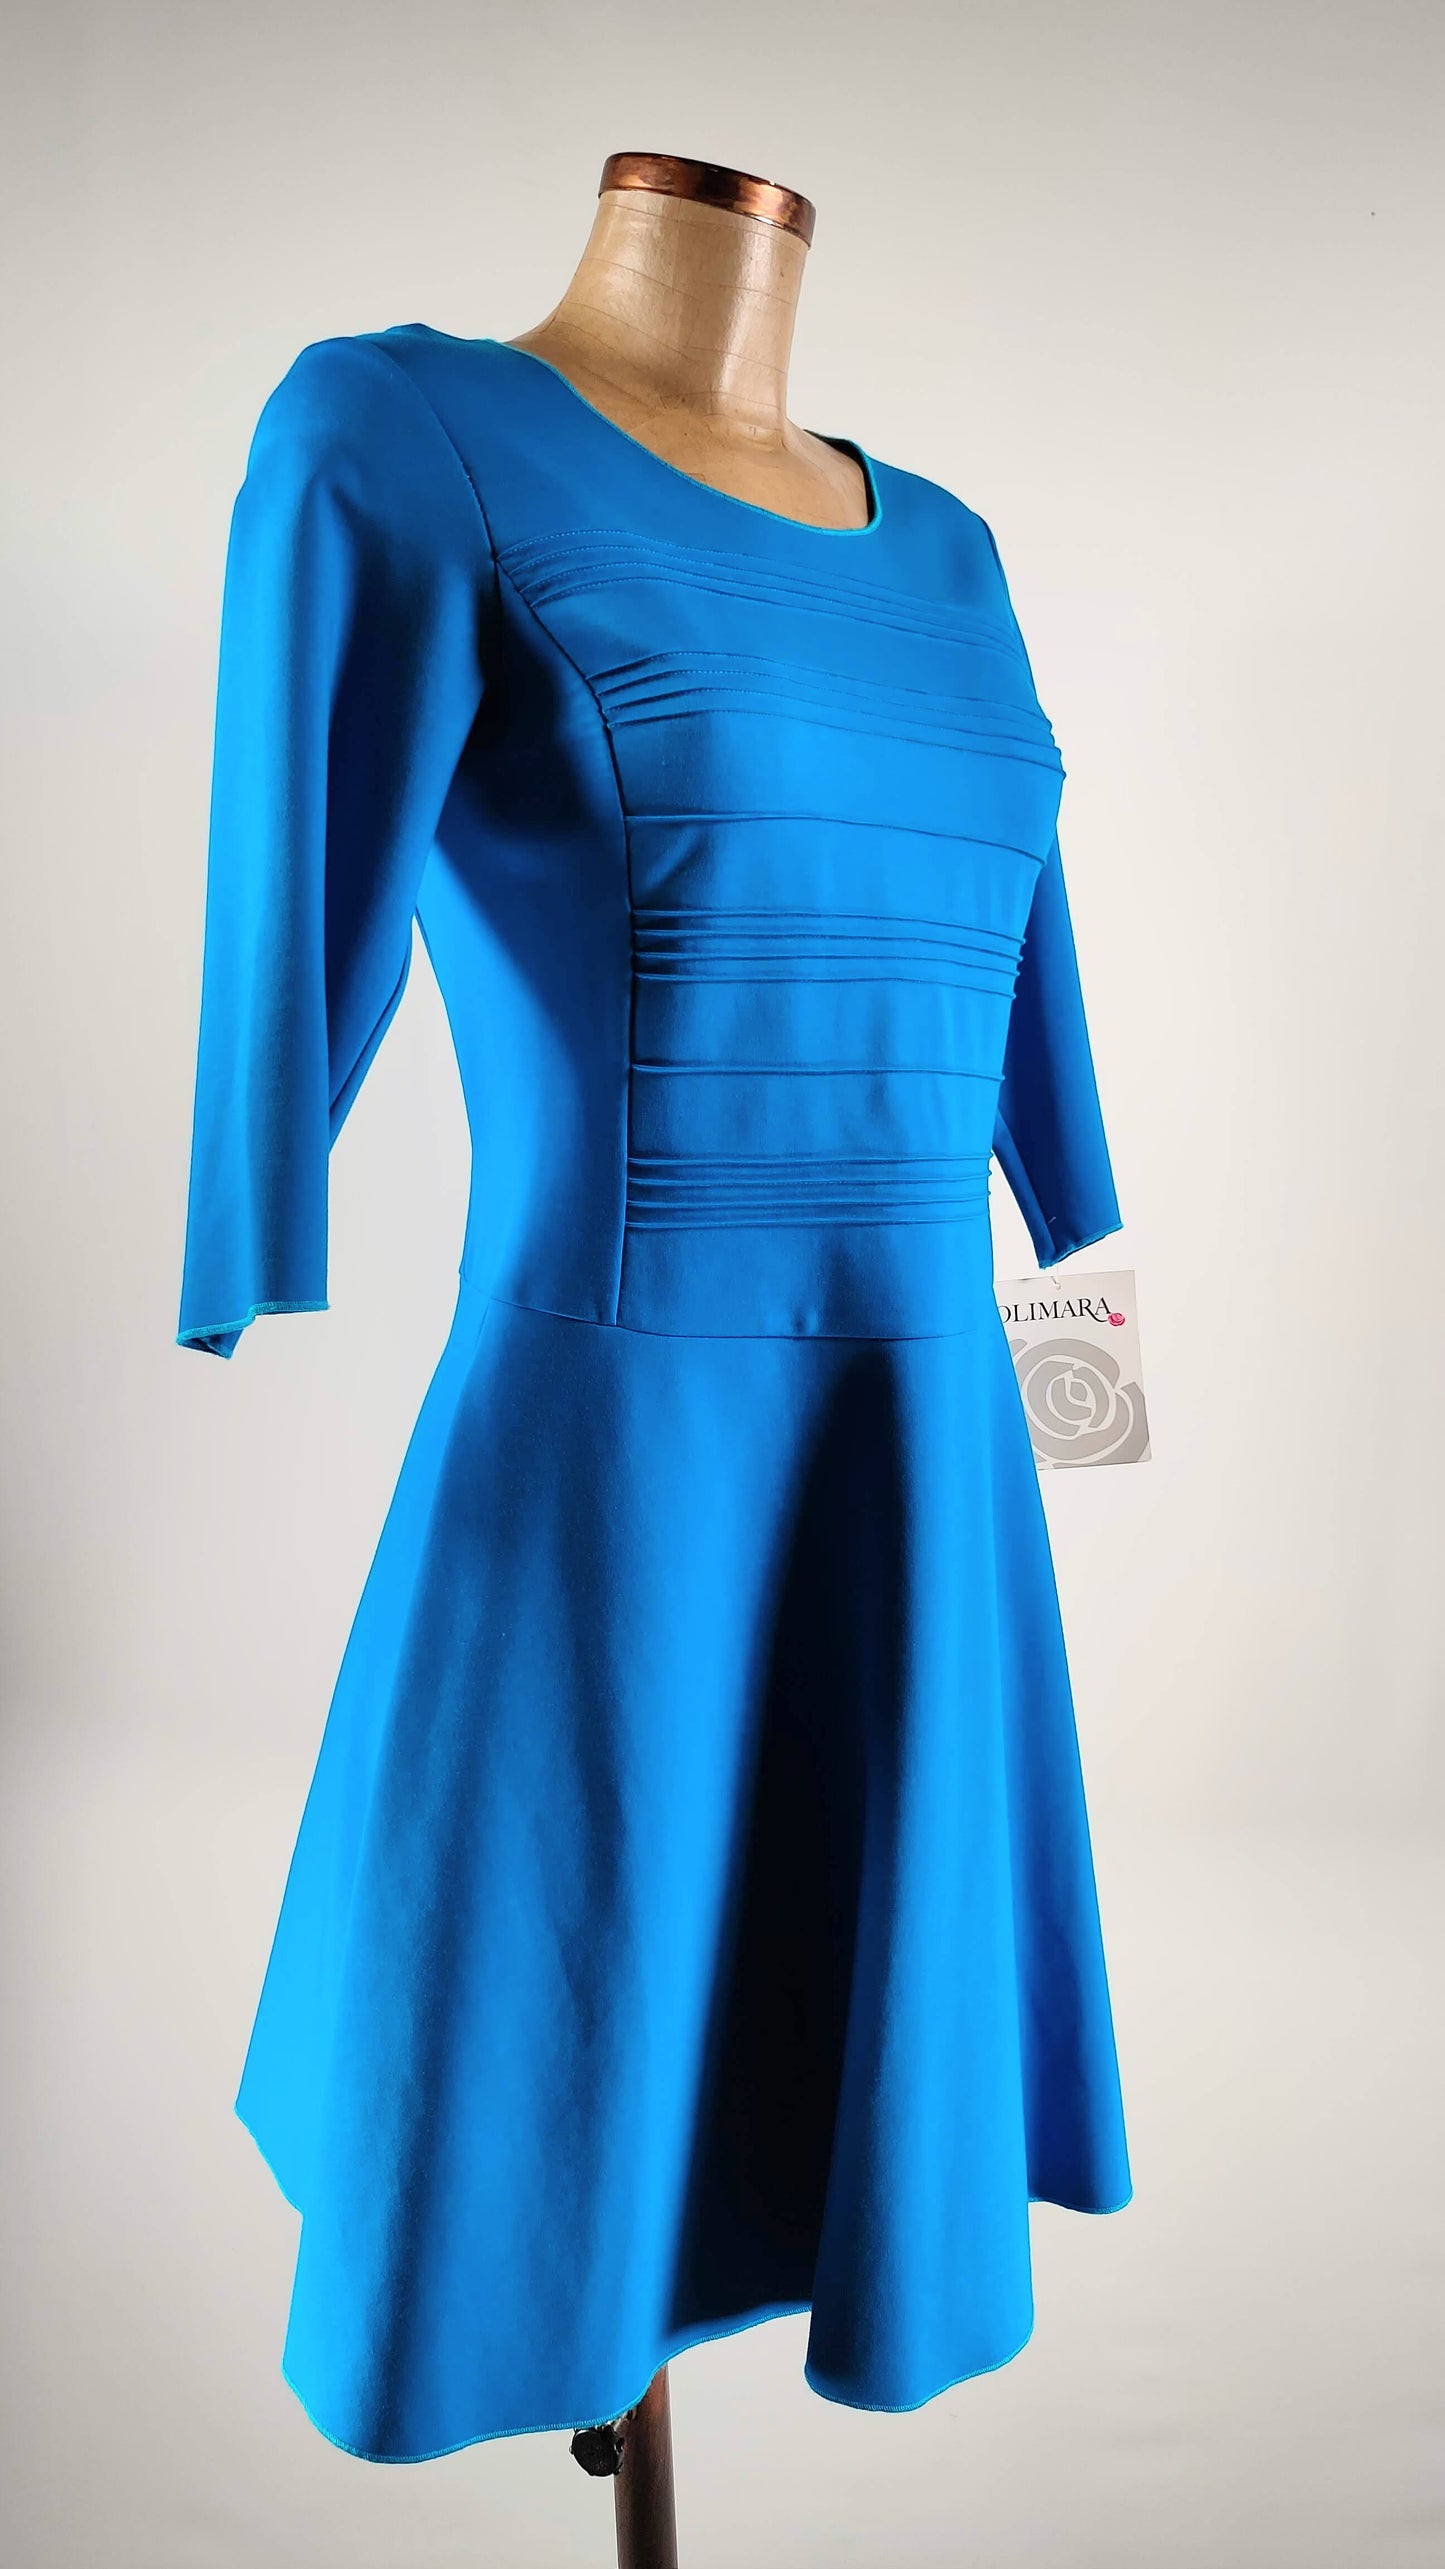 Vestido azul Olimara